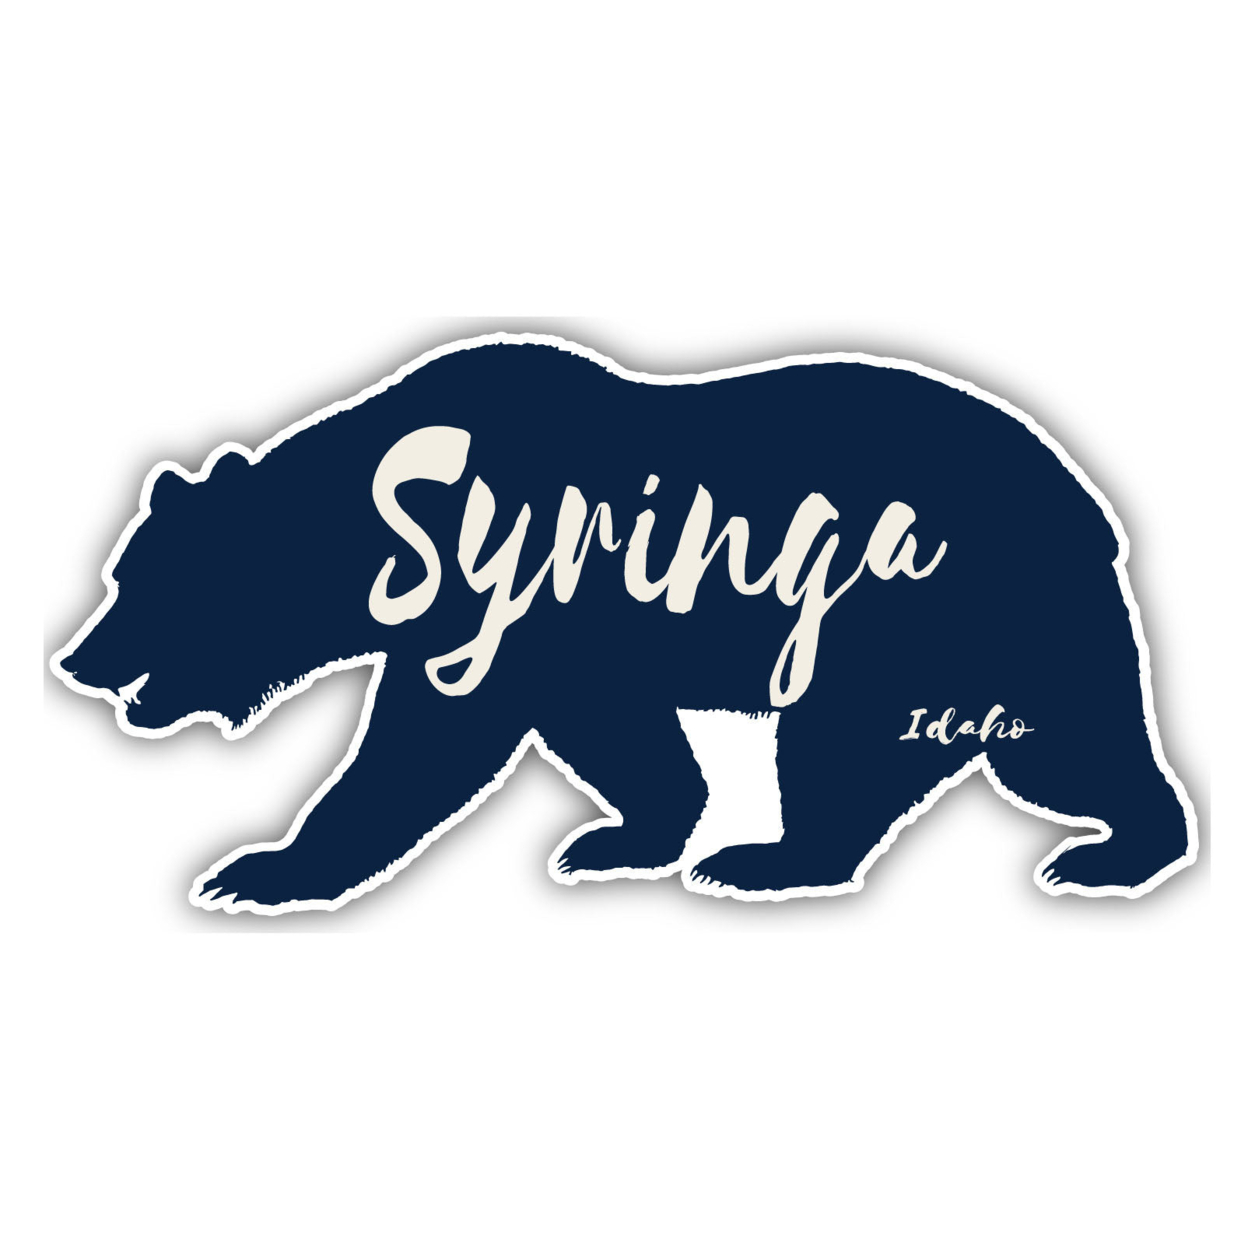 Syringa Idaho Souvenir Decorative Stickers (Choose Theme And Size) - Single Unit, 4-Inch, Bear